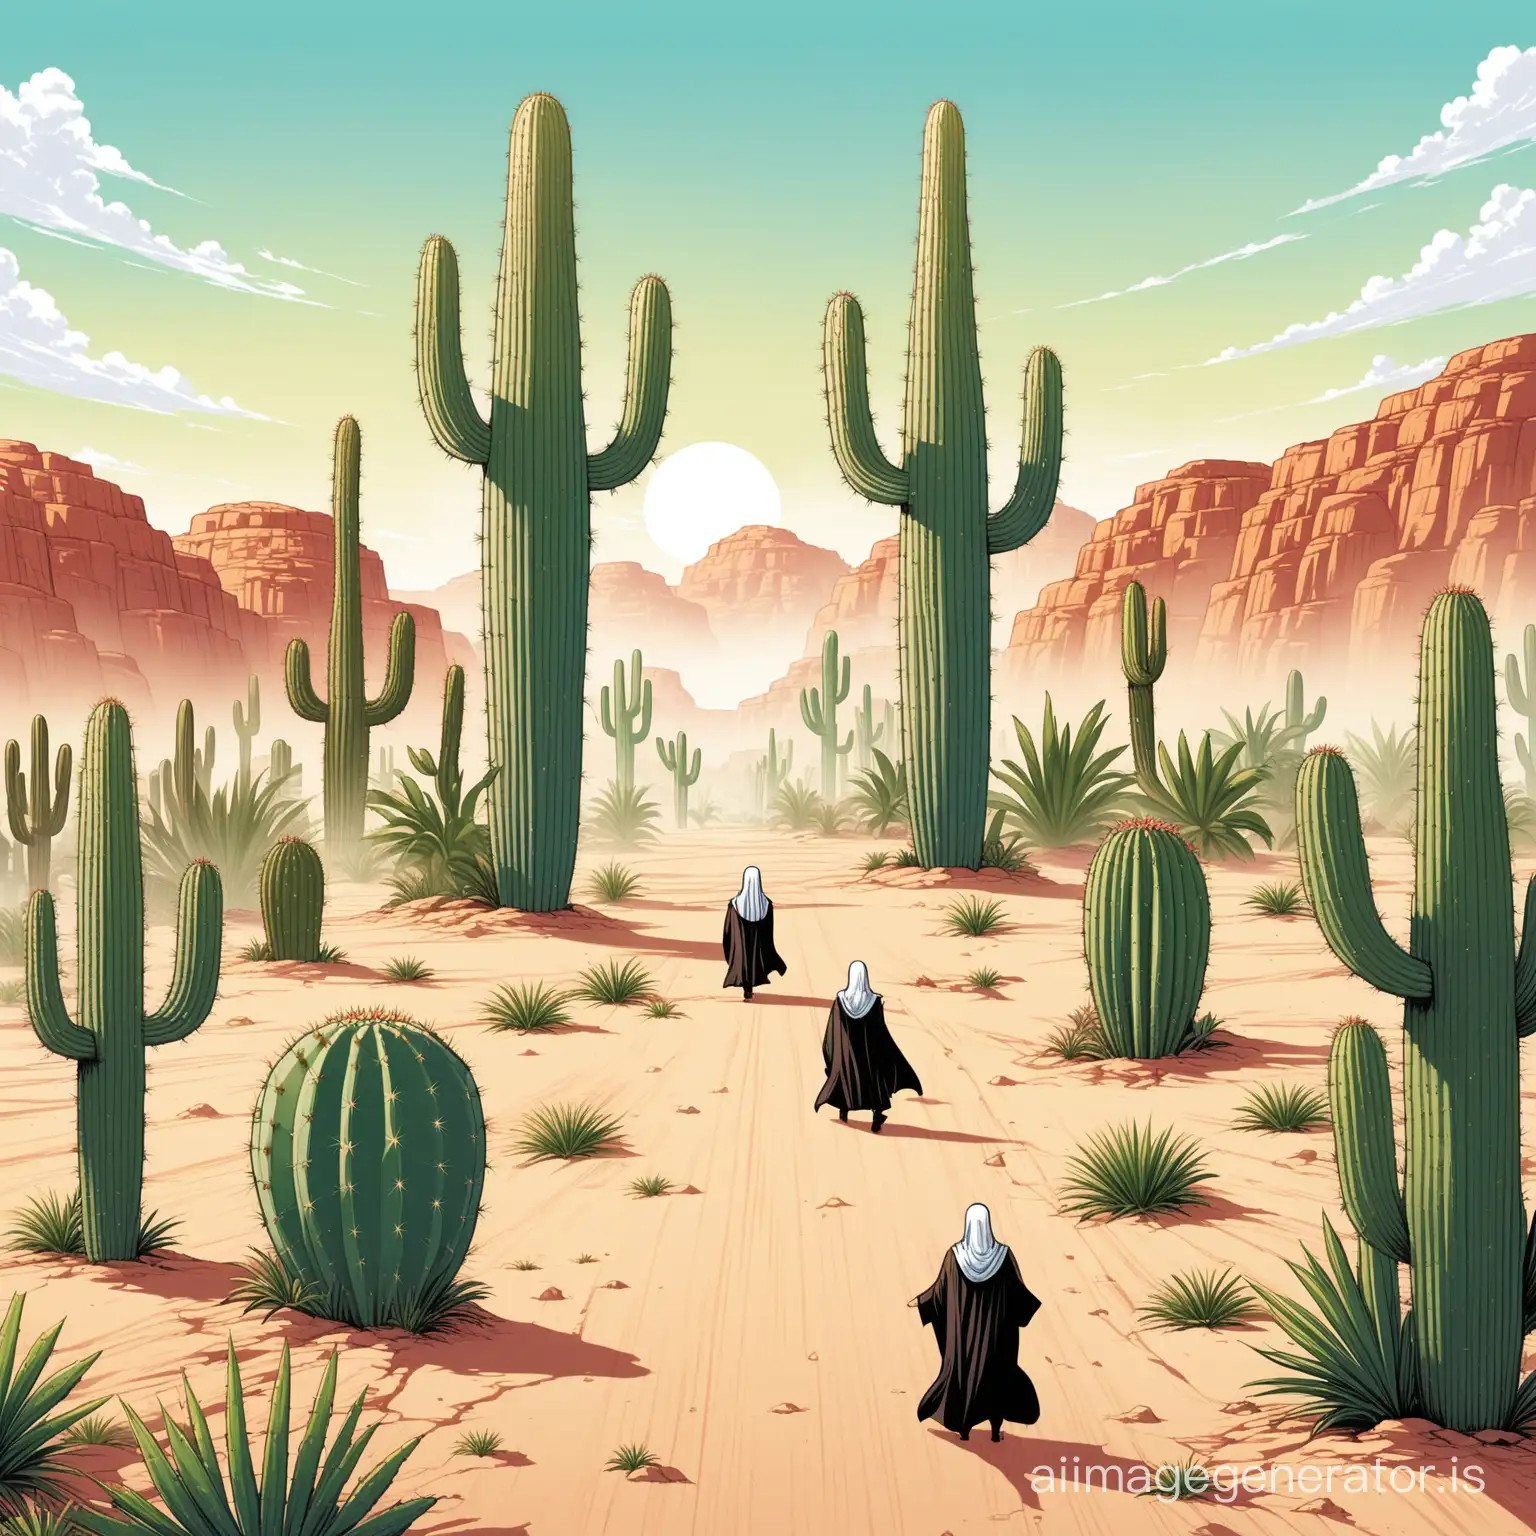 Figure-Navigating-Desert-Courtroom-Scene-with-Cactus-Judges